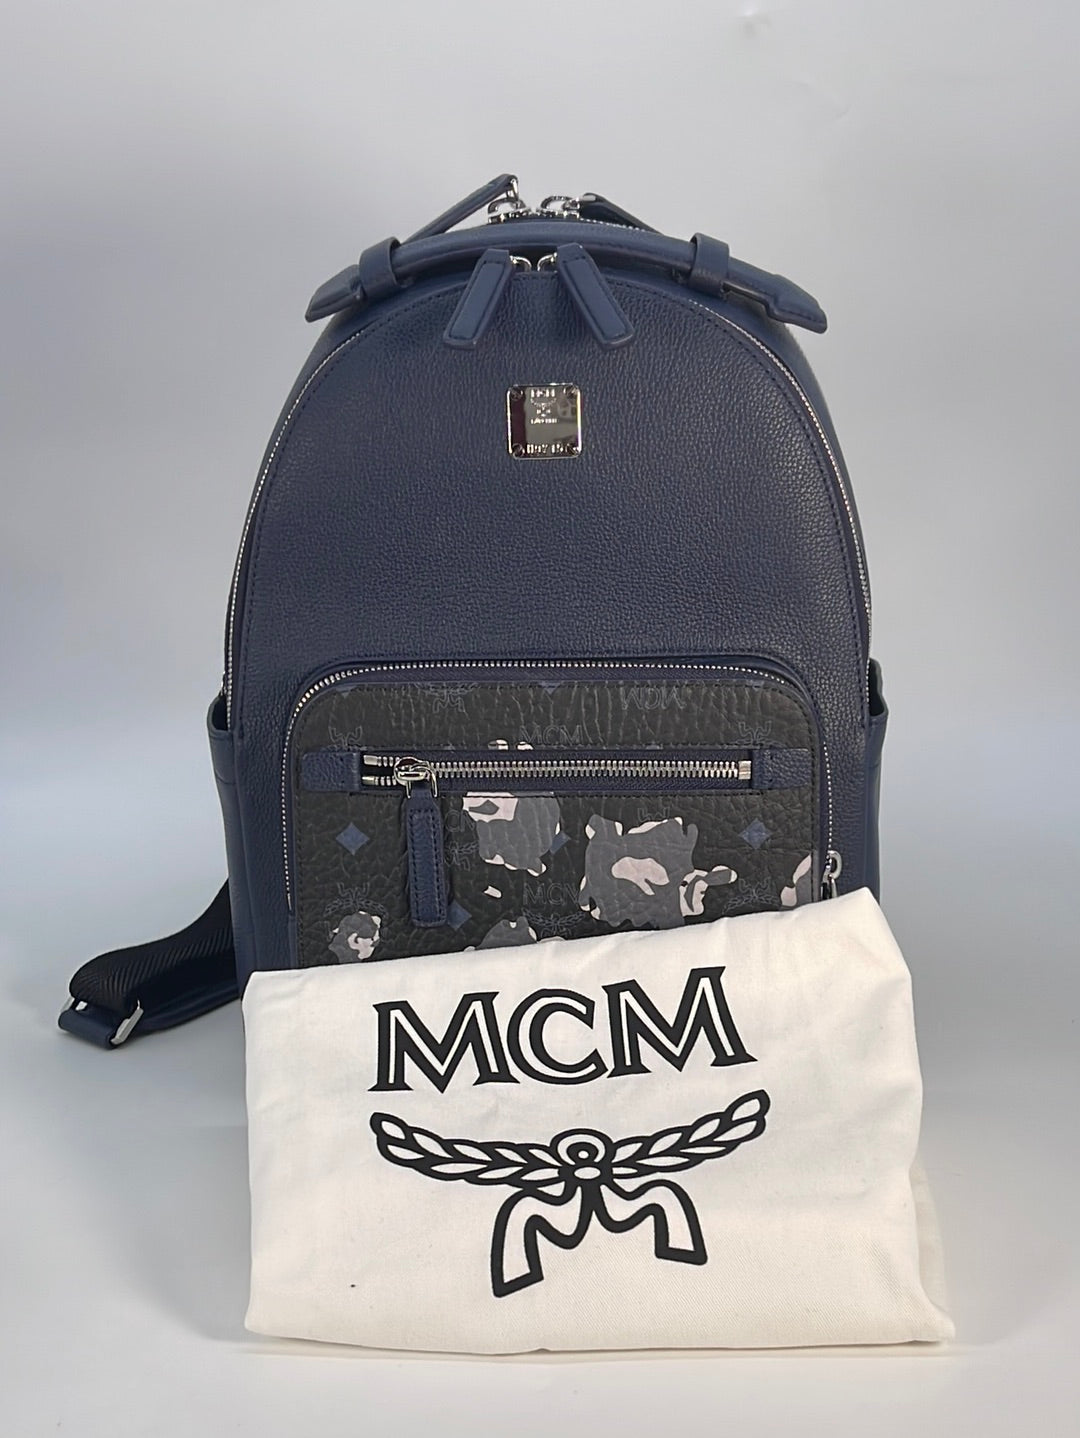 MCM Blue Backpacks